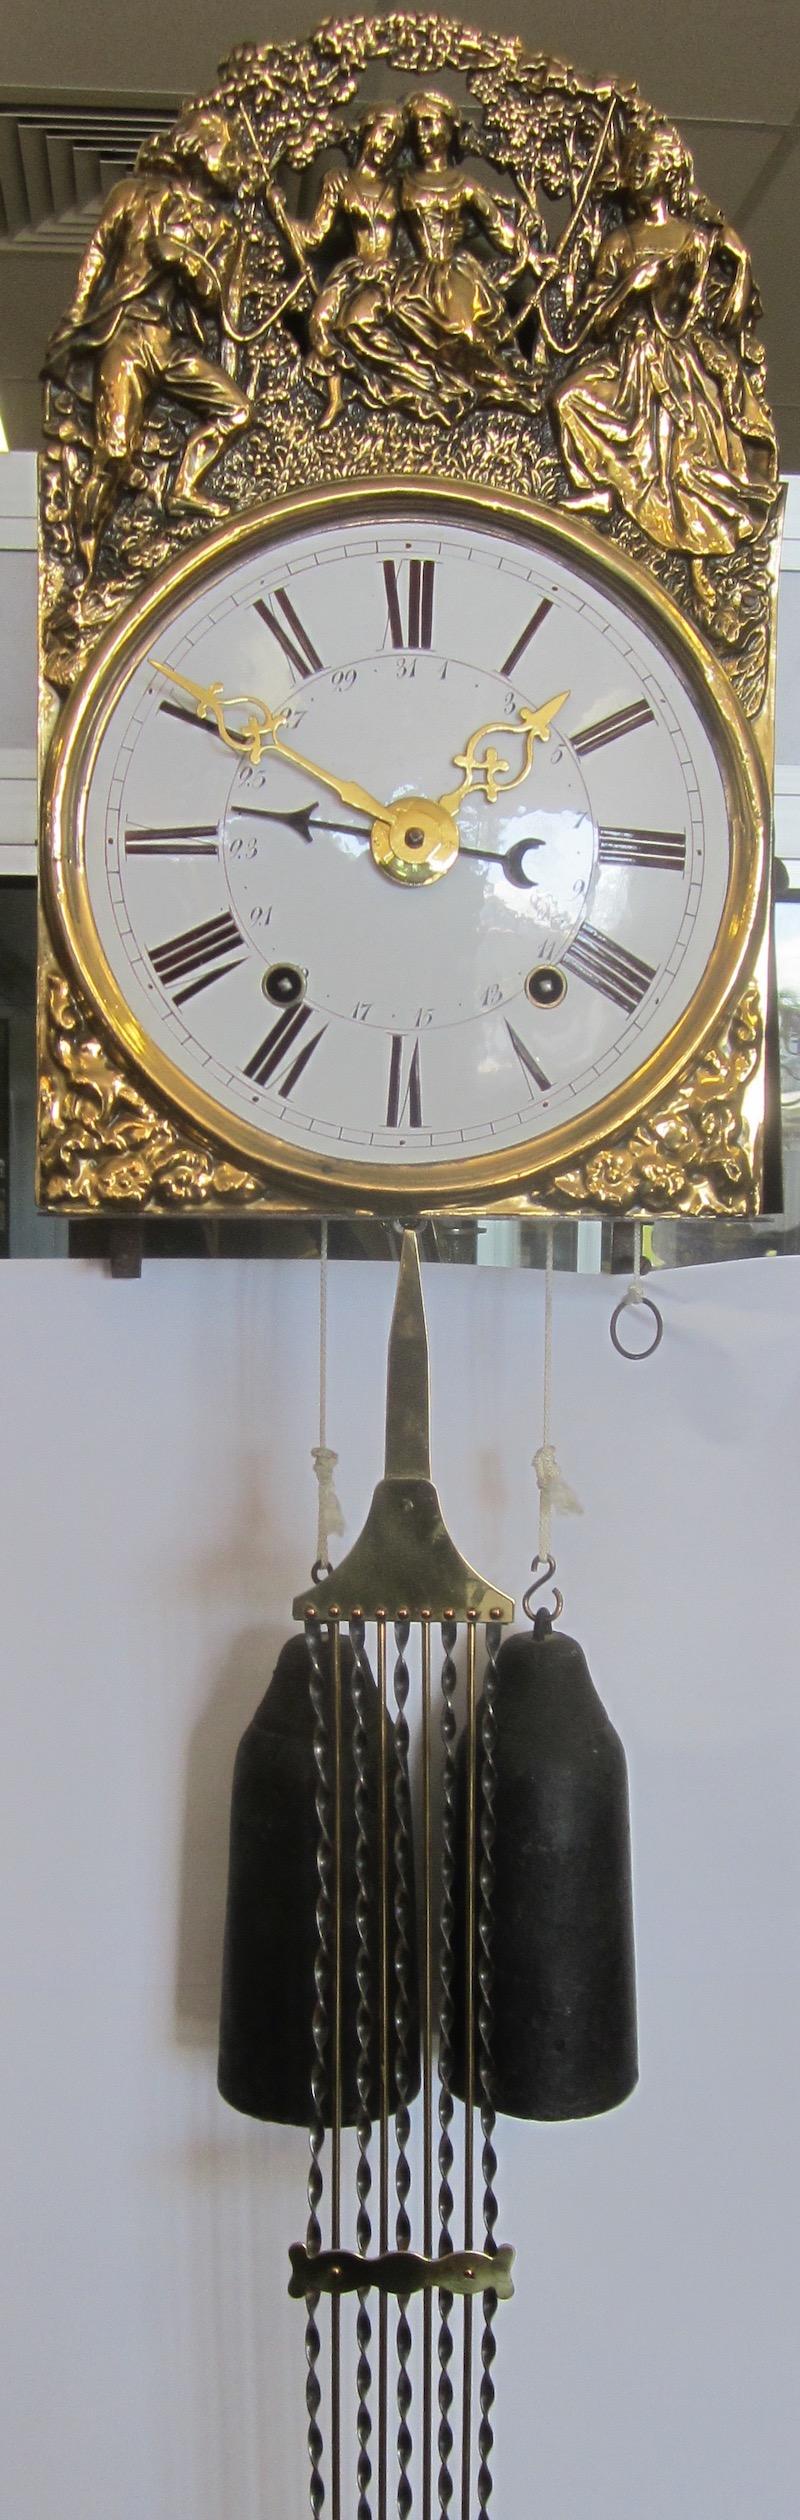 comtoise clocks for sale